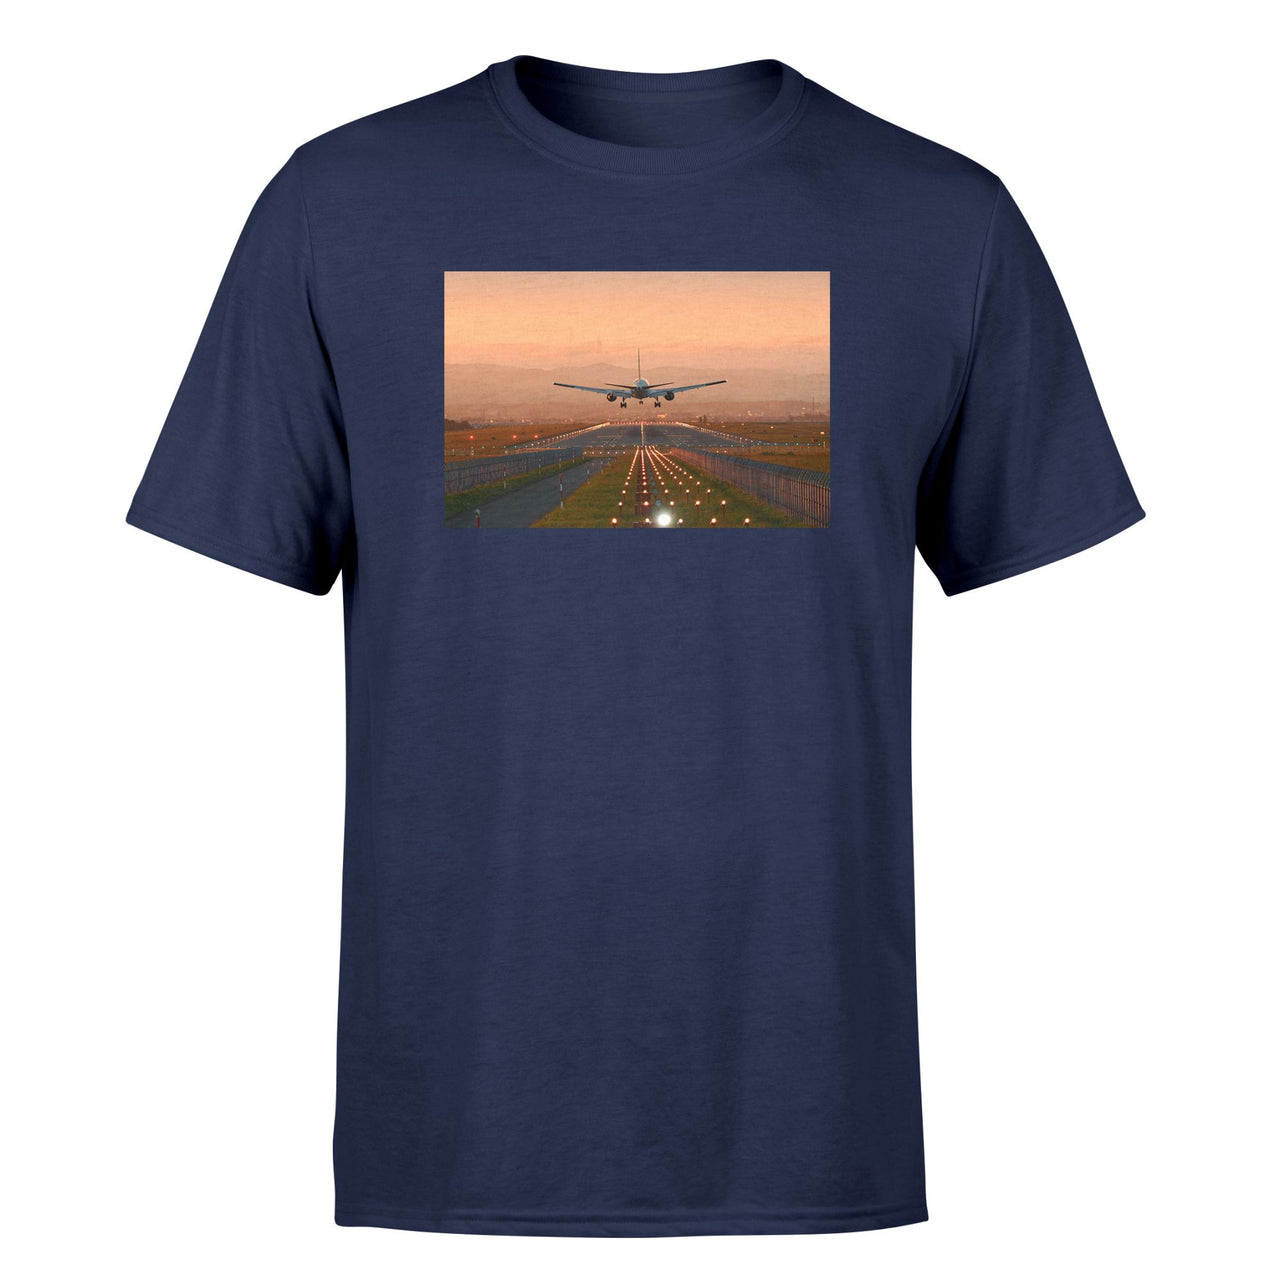 Super Cool Landing During Sunset Designed T-Shirts